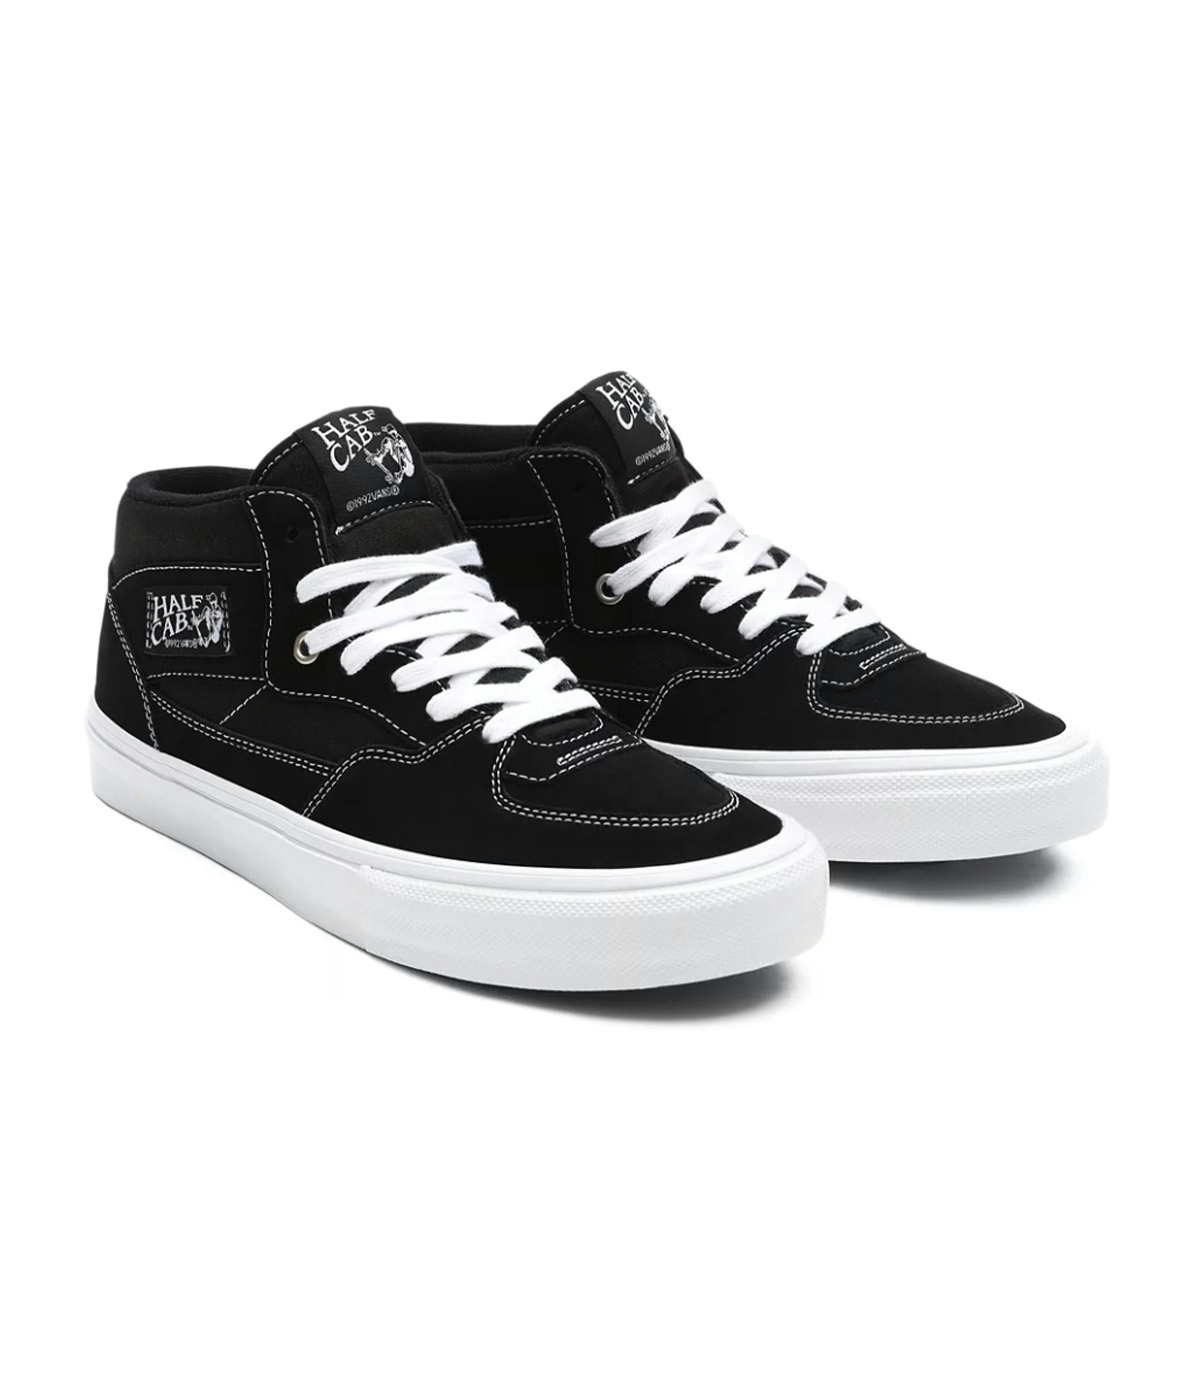 Vans Skate Half Cab Shoes - Sko Black/White 1